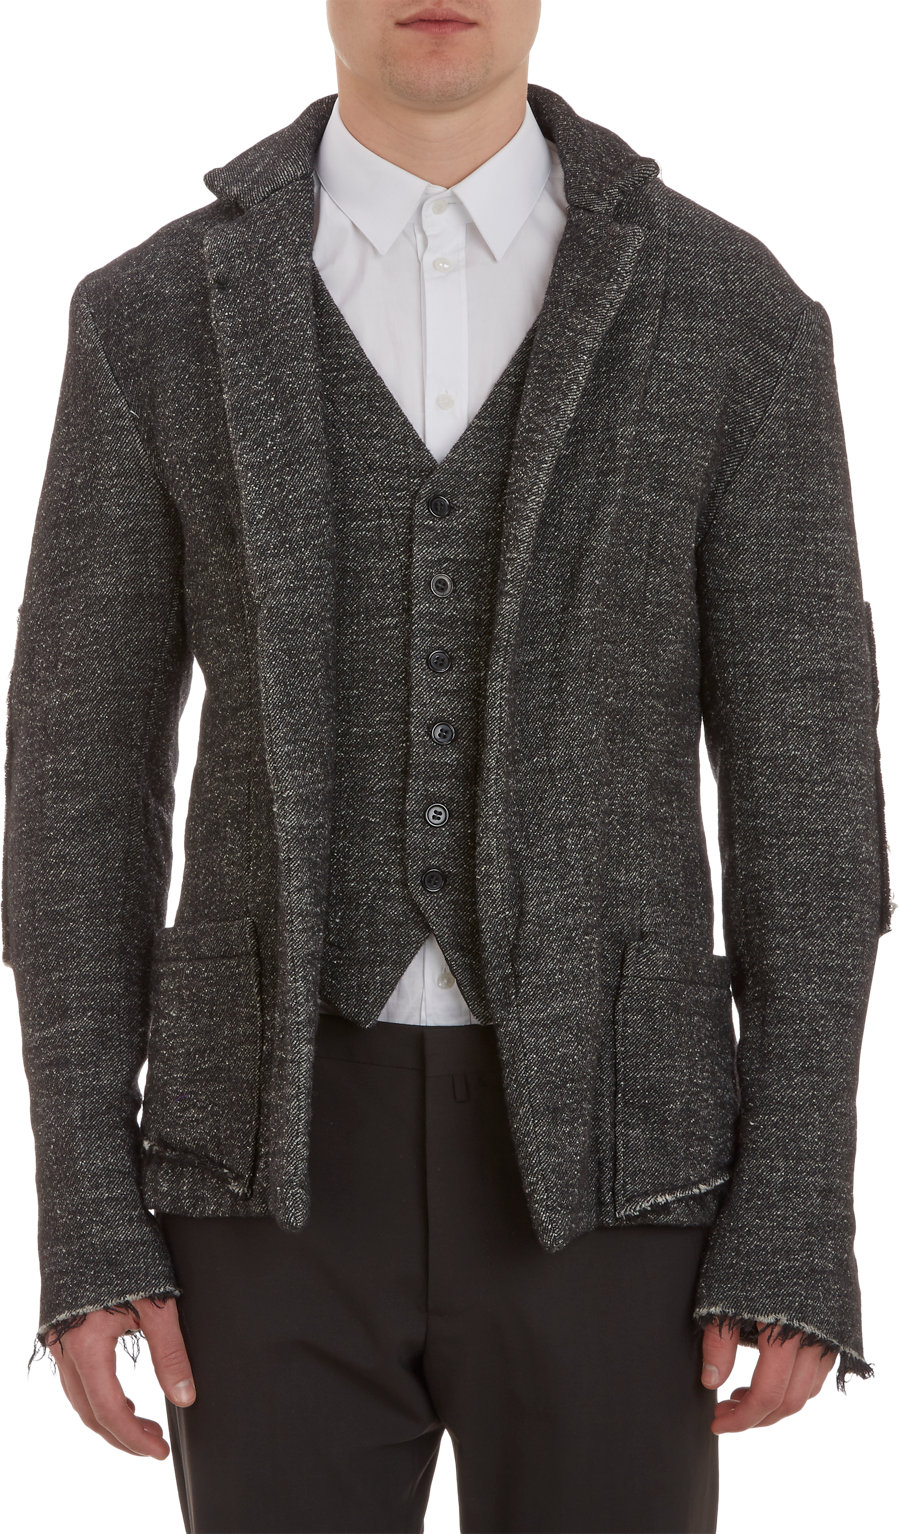 Greg Lauren The Charcoal Tweed Dickens Oliver Jacket in Gray for Men - Lyst